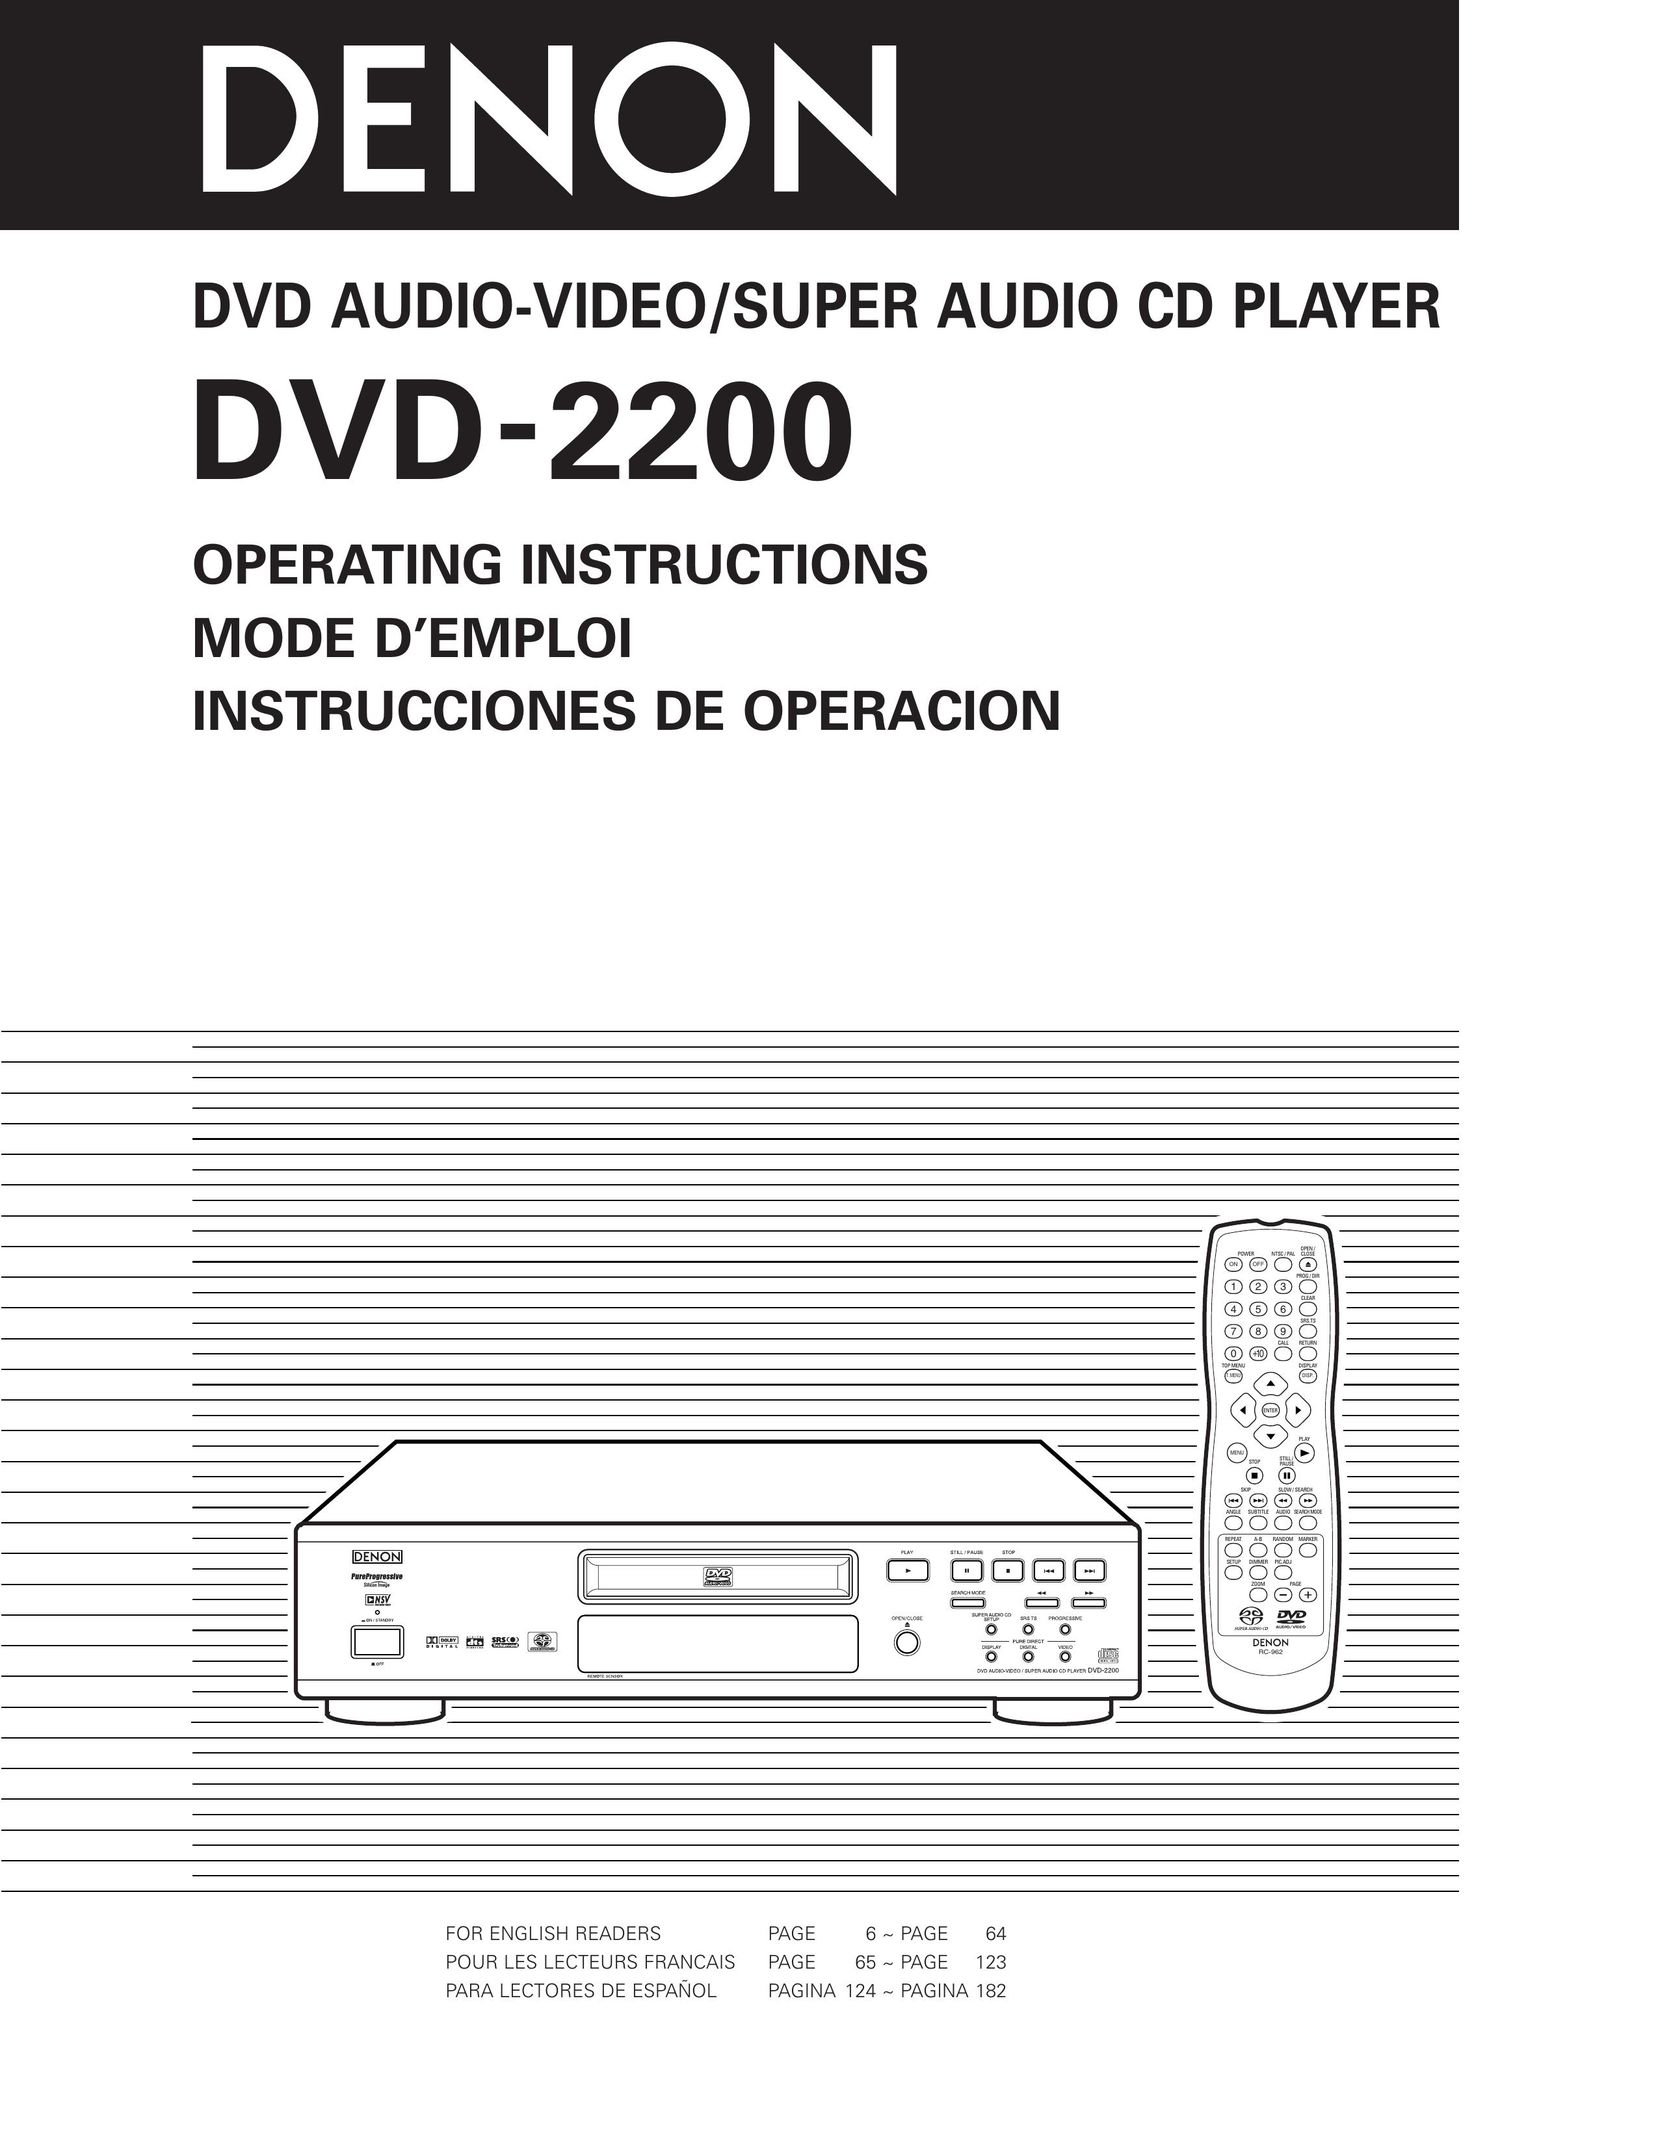 Denon DVD-2200 DVD Player User Manual